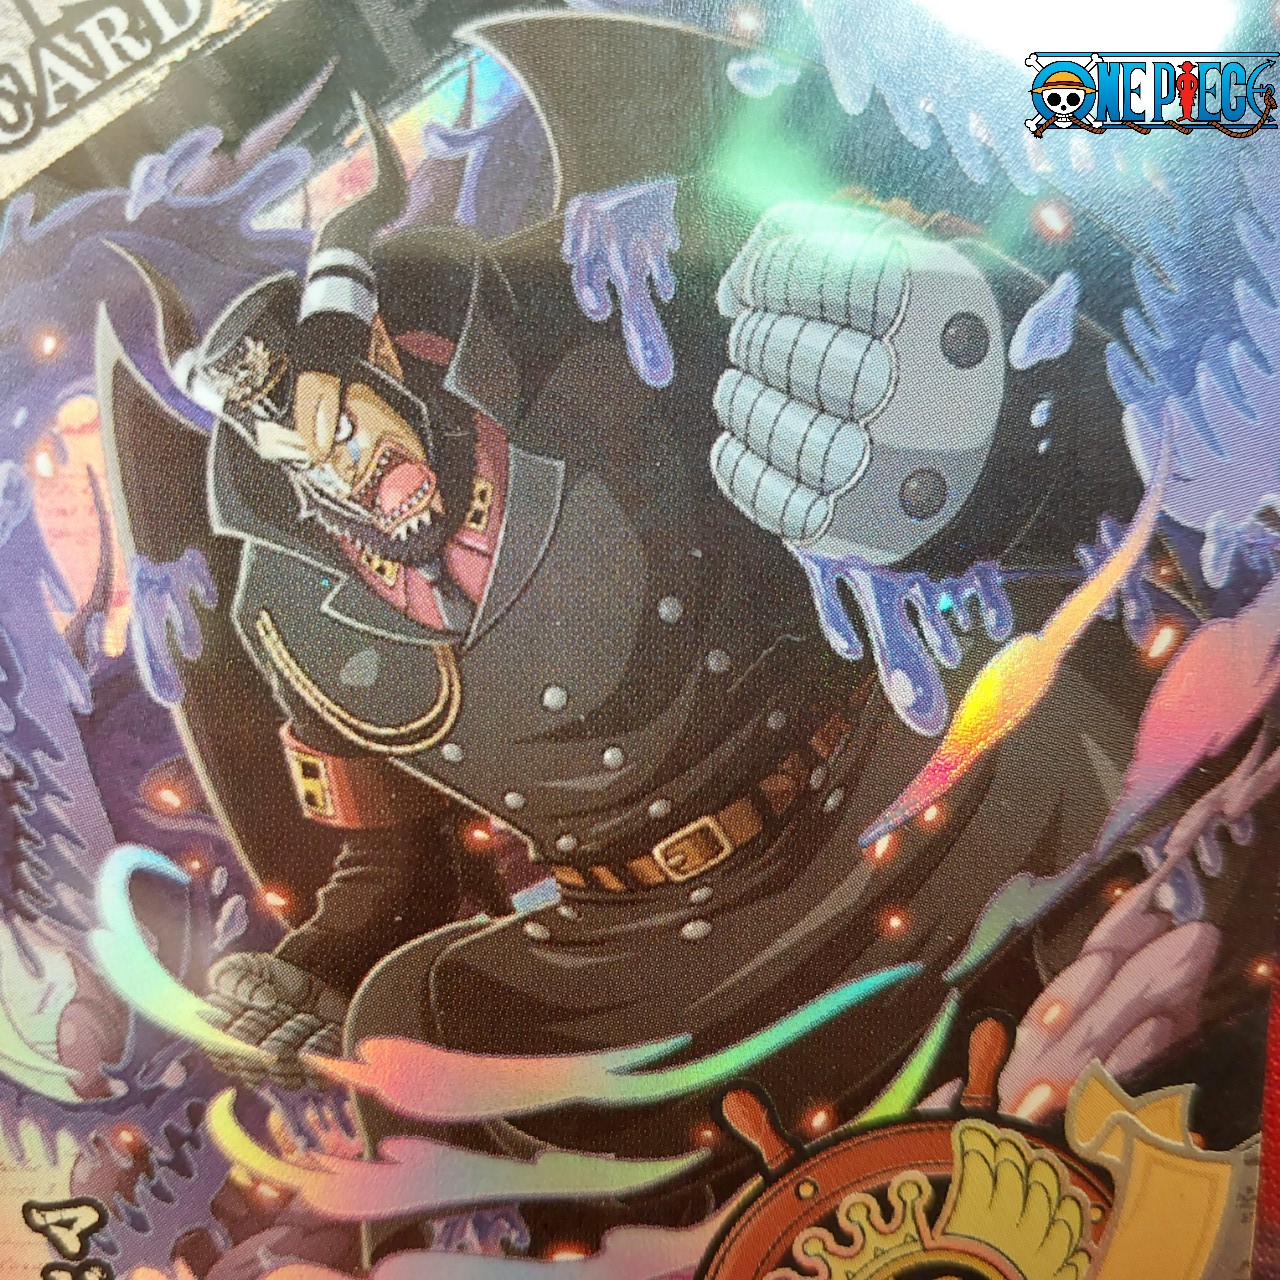 Anichara Heroes One Piece Vol. 8 Impel Down: Magellan - My Anime Shelf